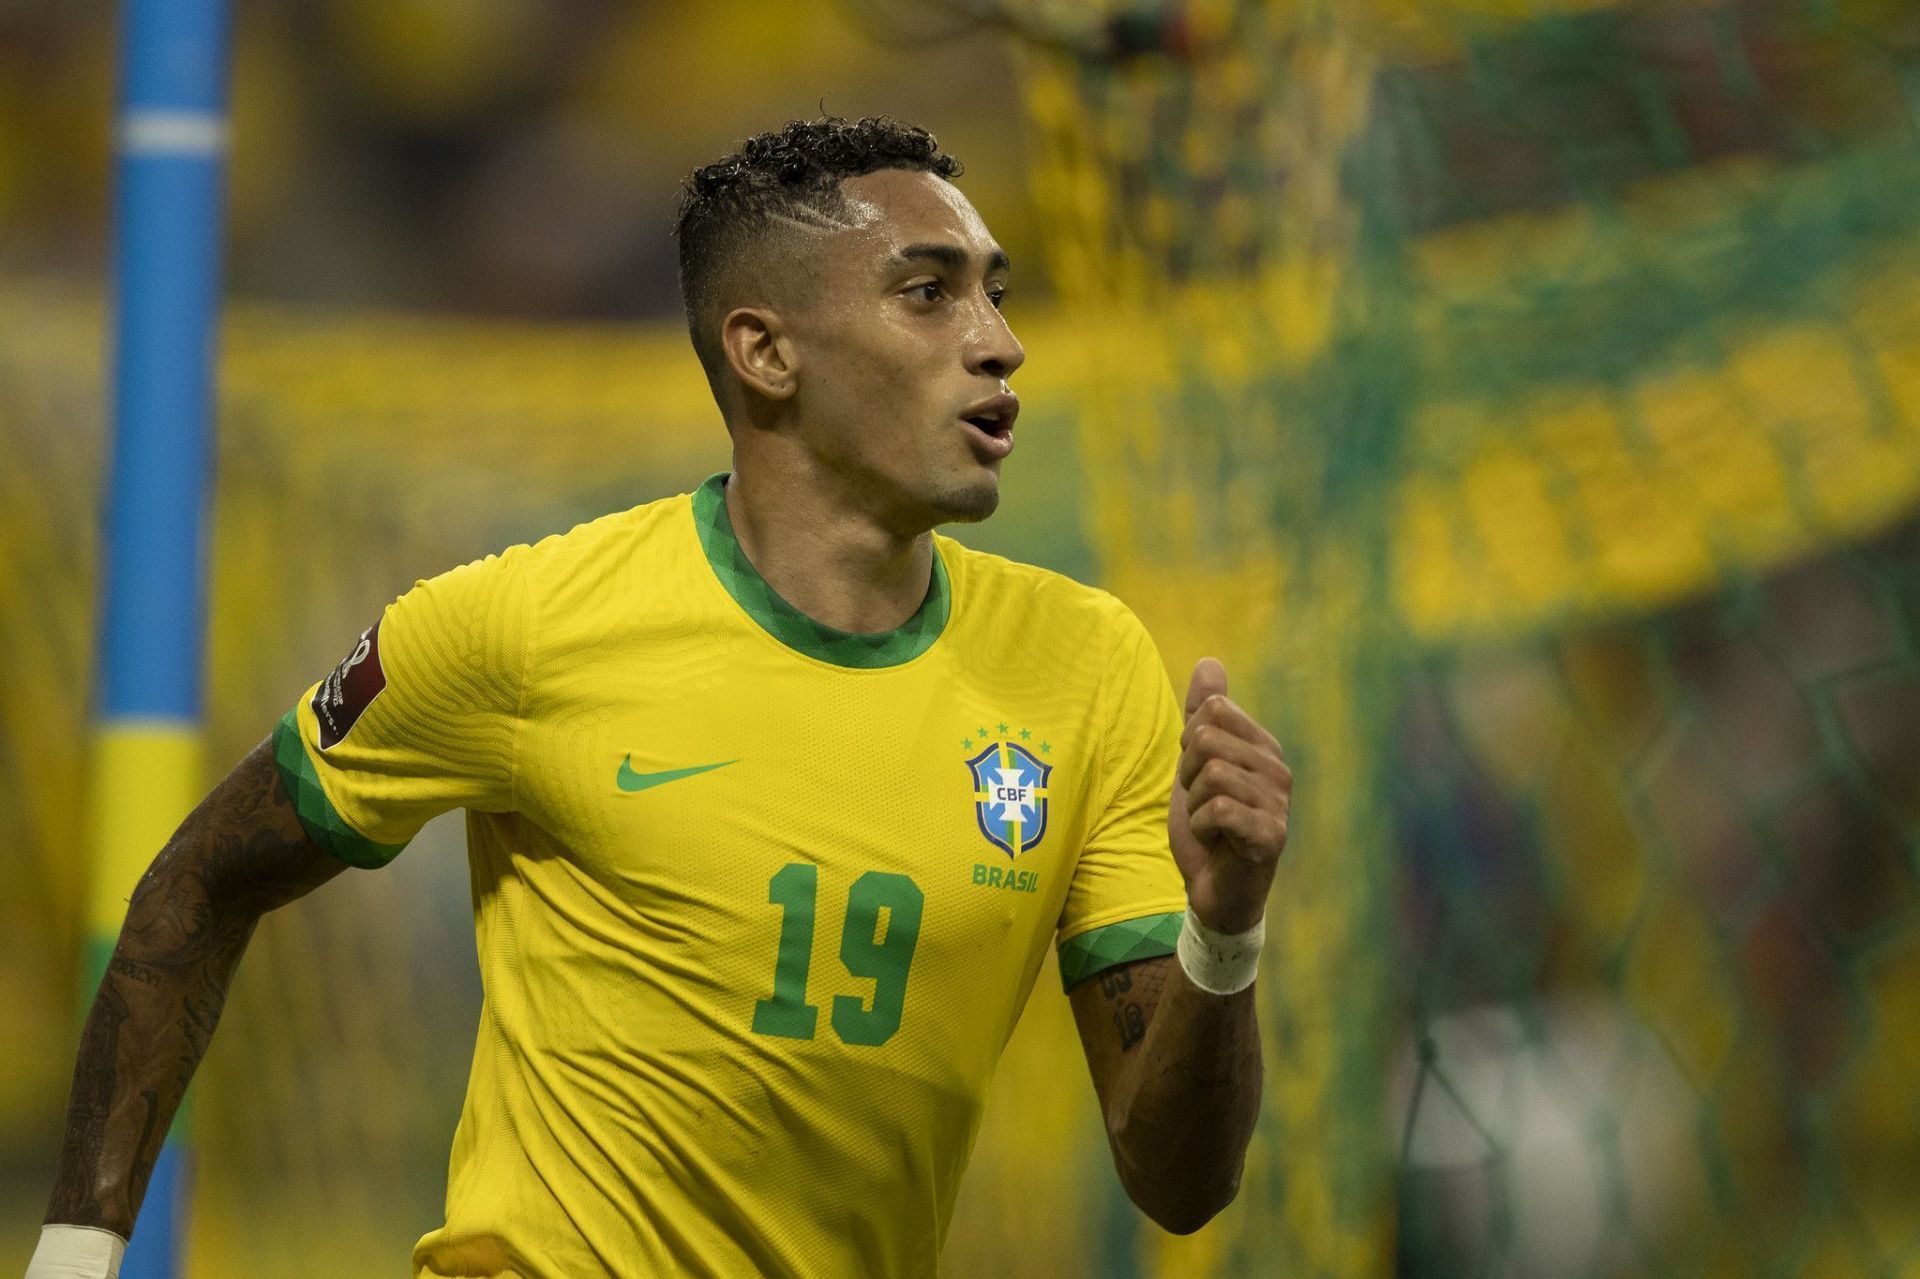 Raphinha scored his first international goal for Brazil.